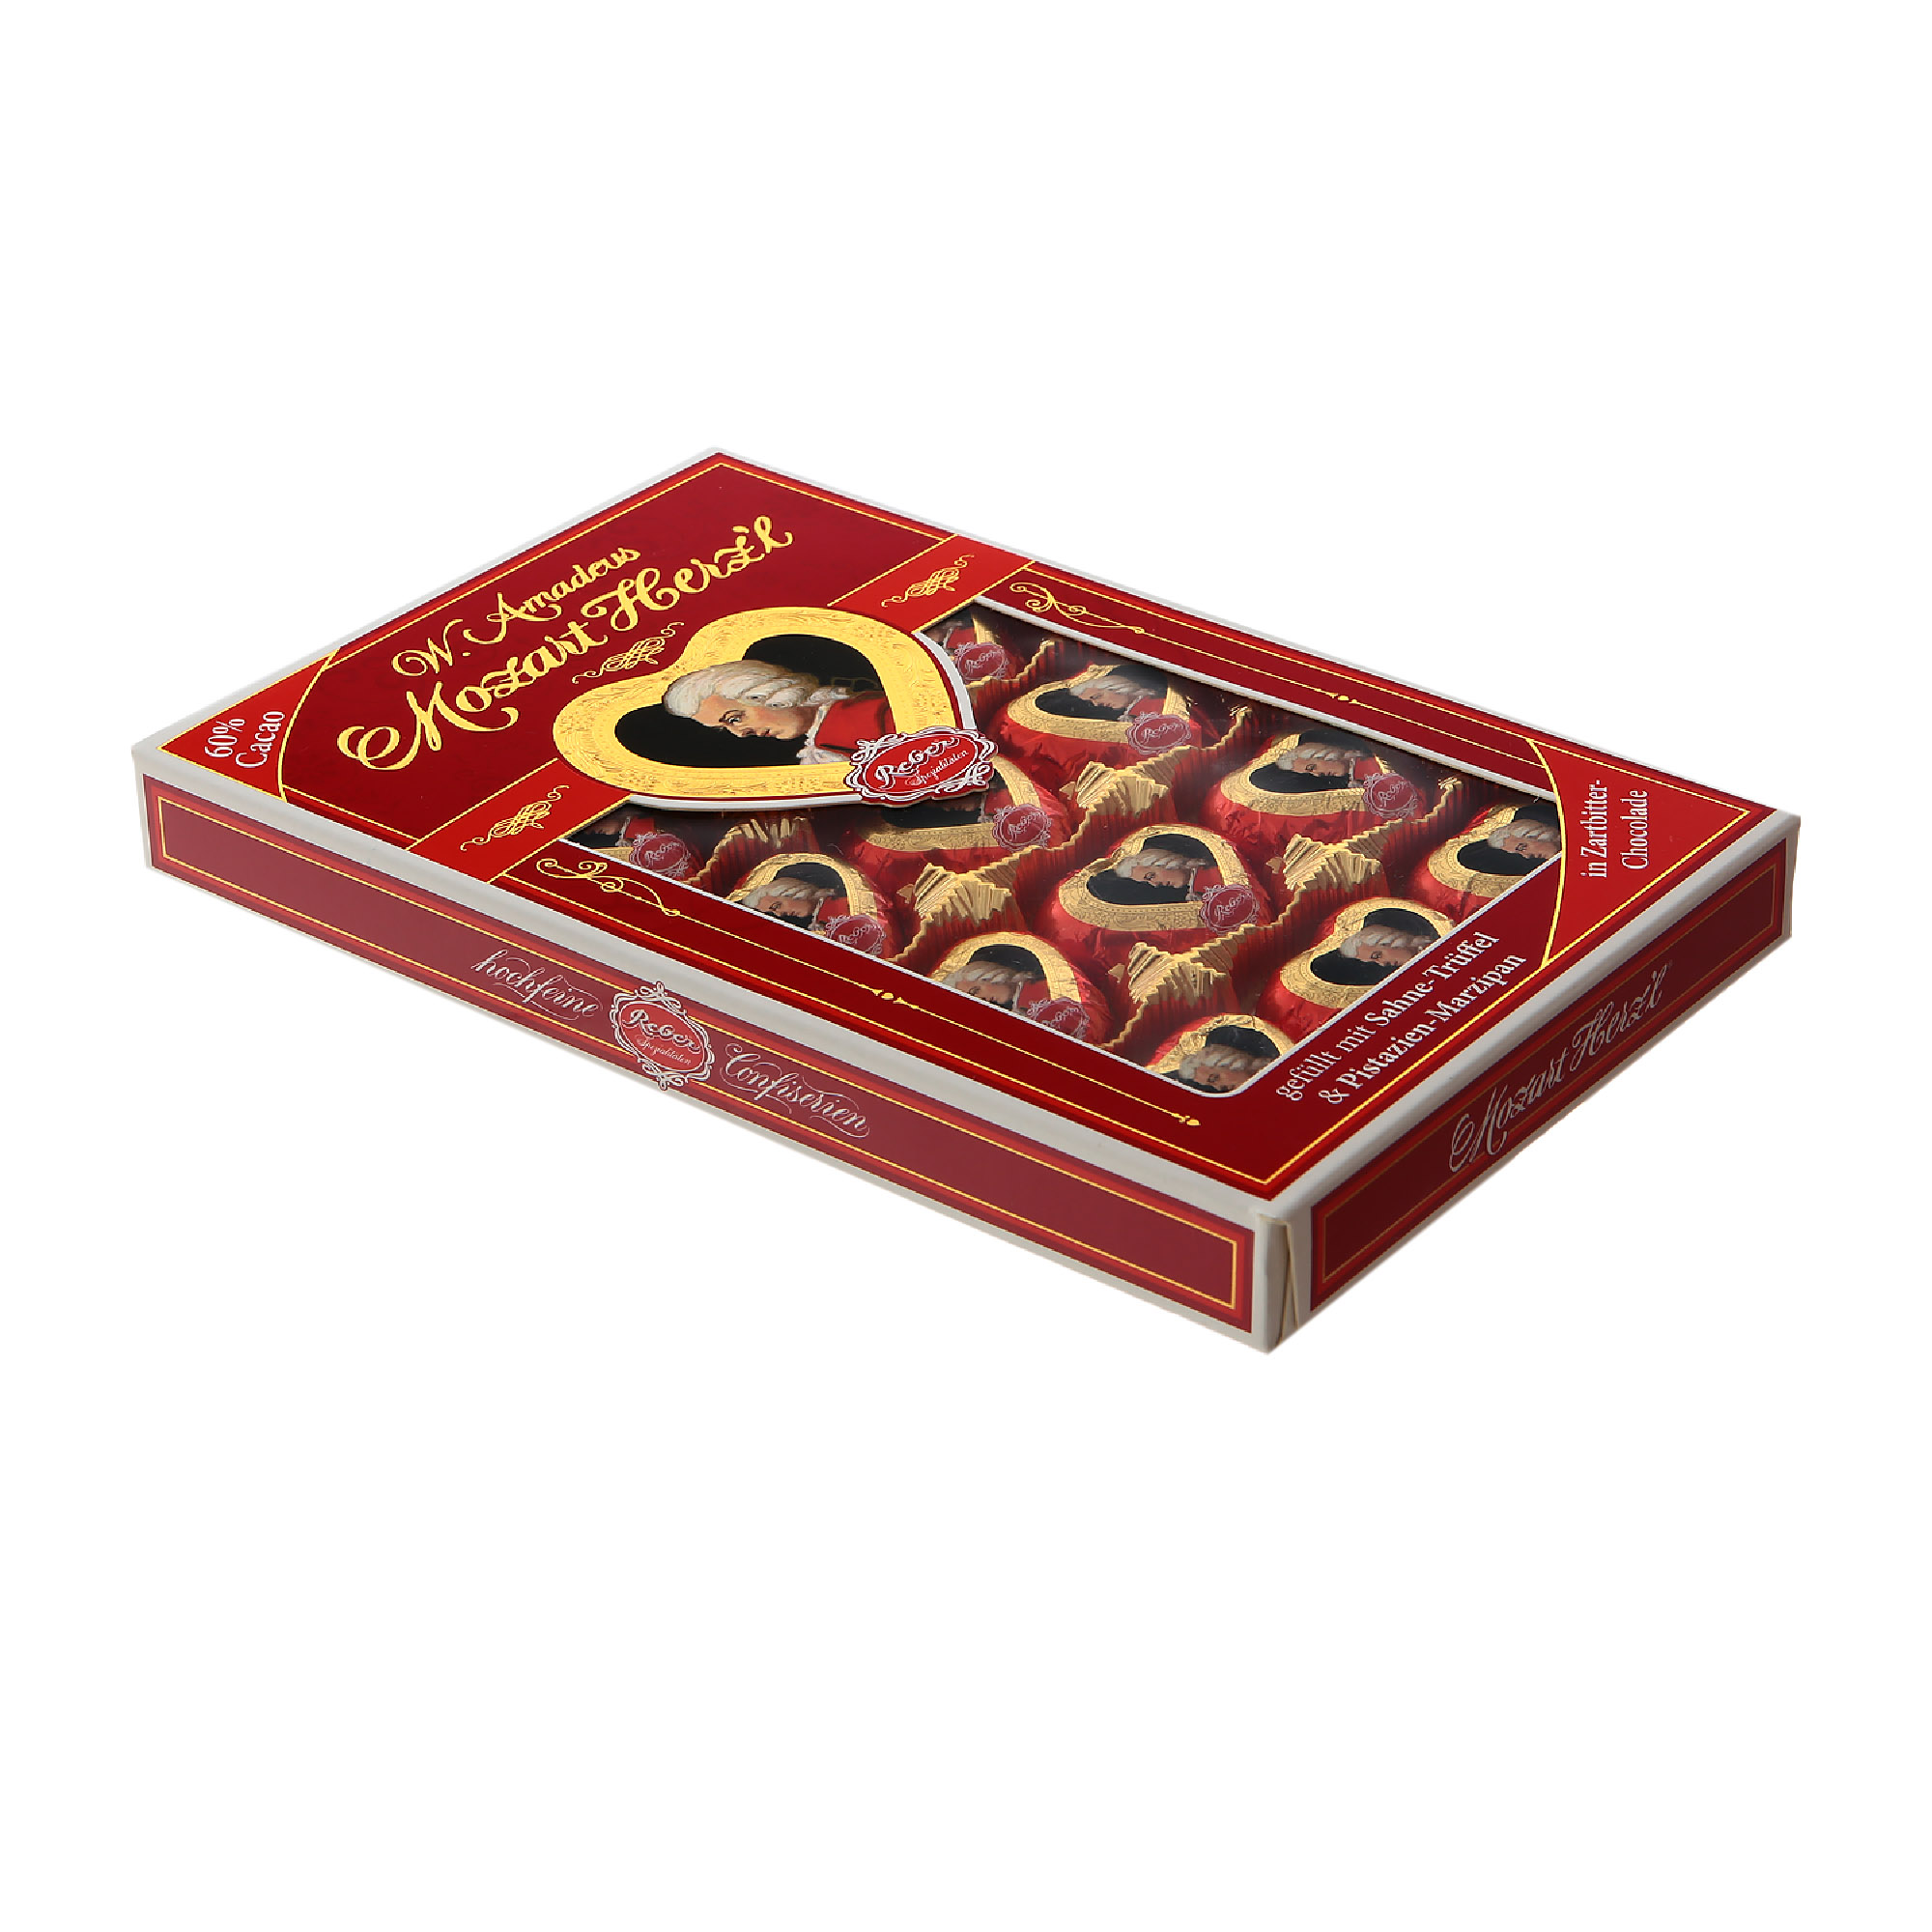 набор конфет моцарт reber 330 340 г 1410104 1 Сердечки шоколадные Reber Моцарт 150 г